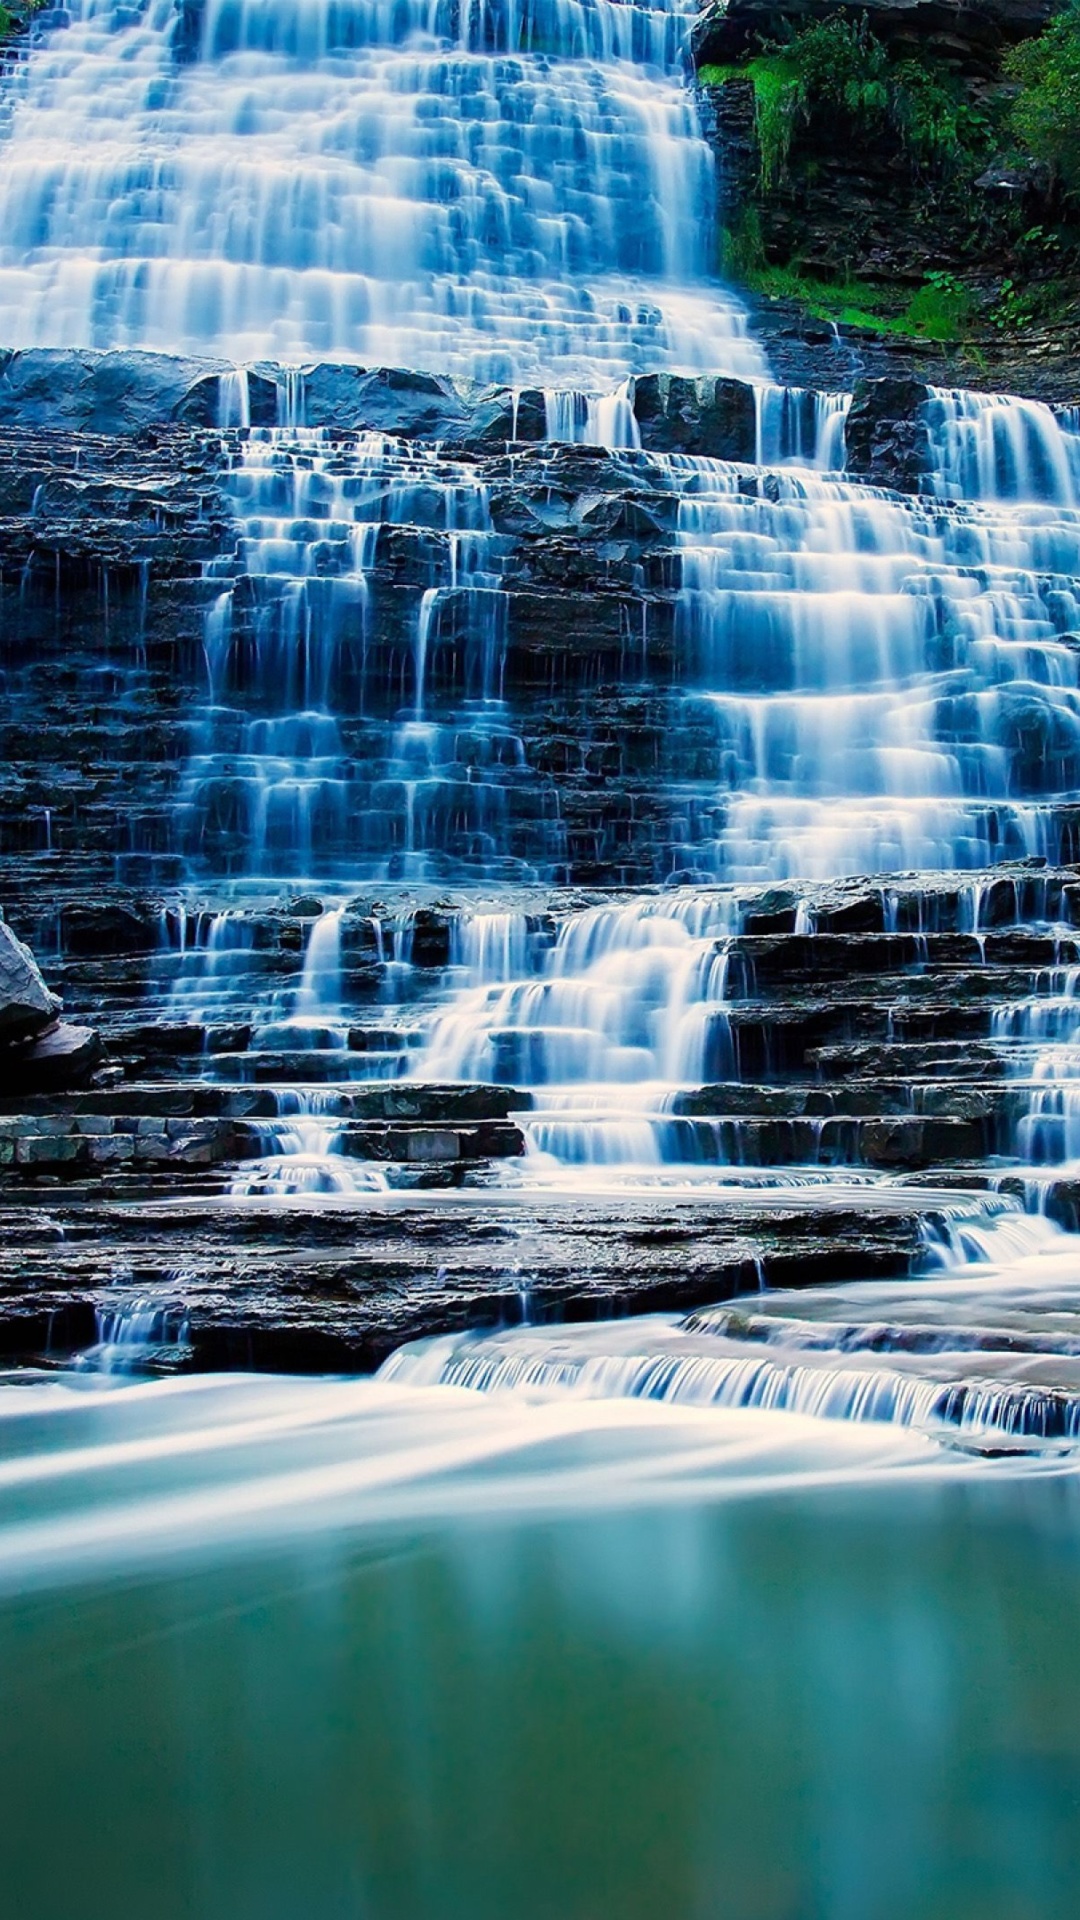 Albion Falls cascade waterfall in Hamilton, Ontario, Canada wallpaper 1080x1920